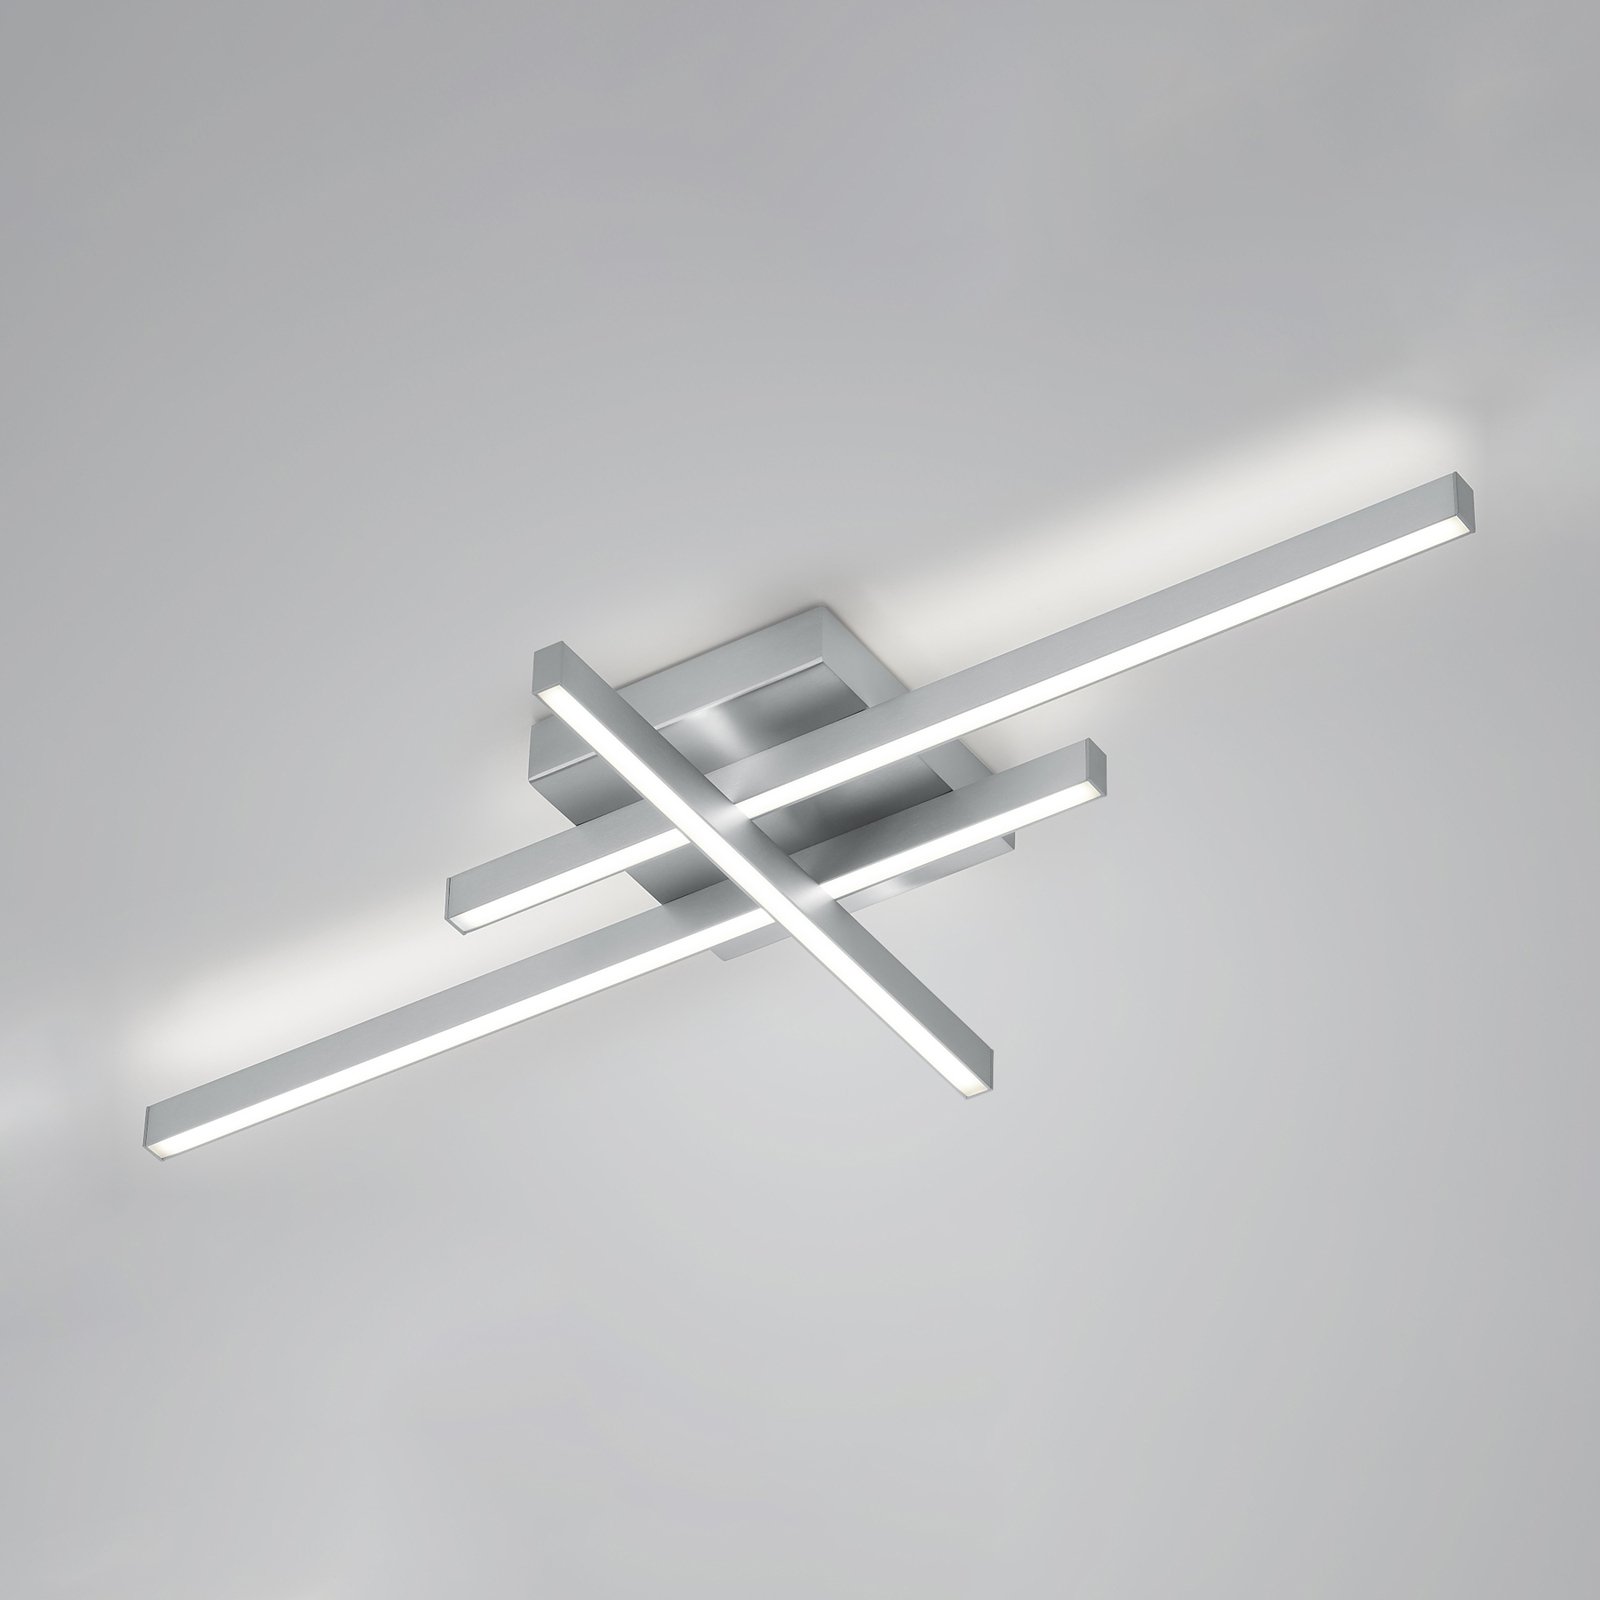 Feli LED ceiling light with three profiles, nickel